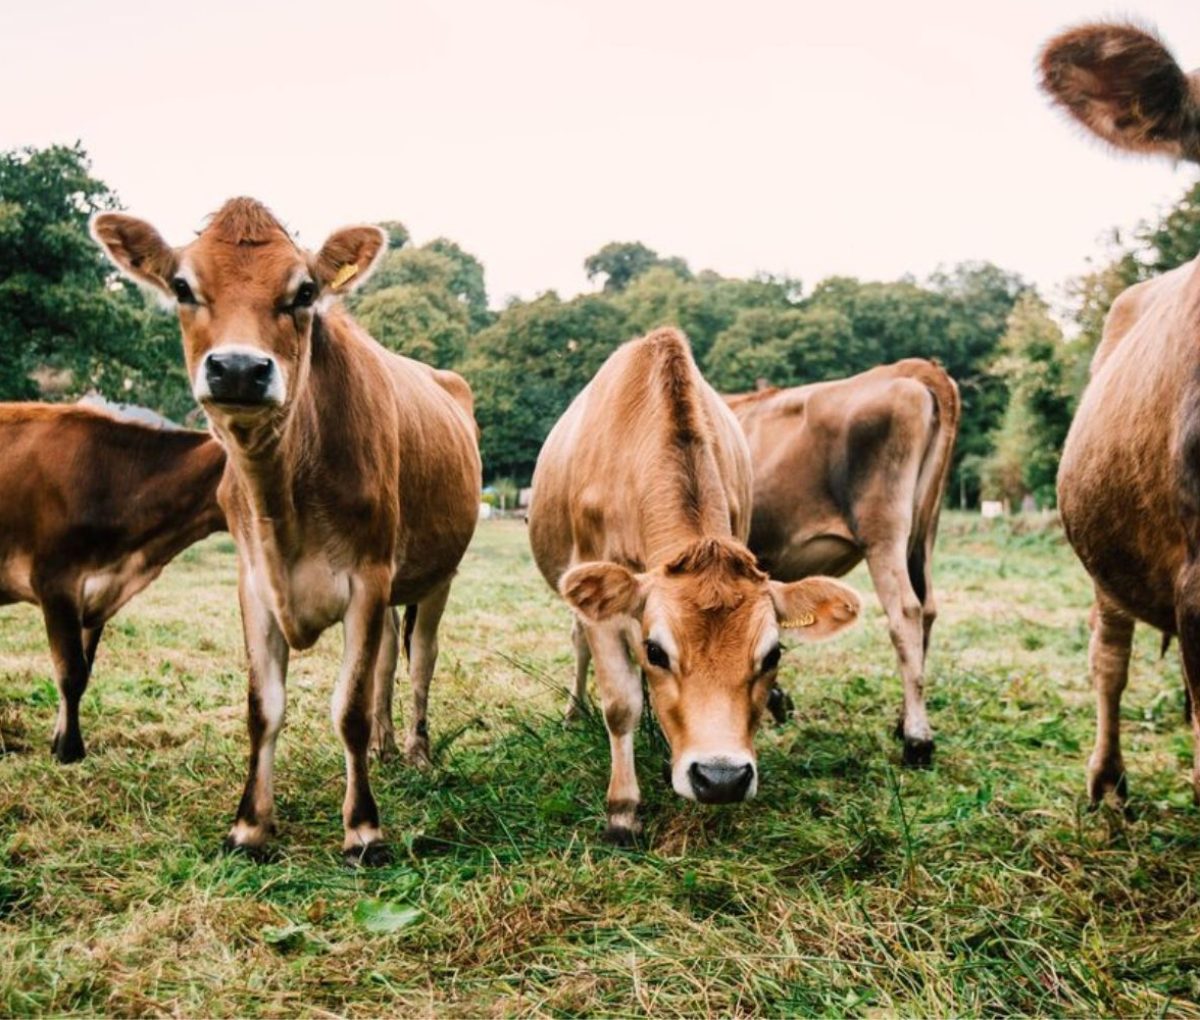 Cows in a field, Jersey